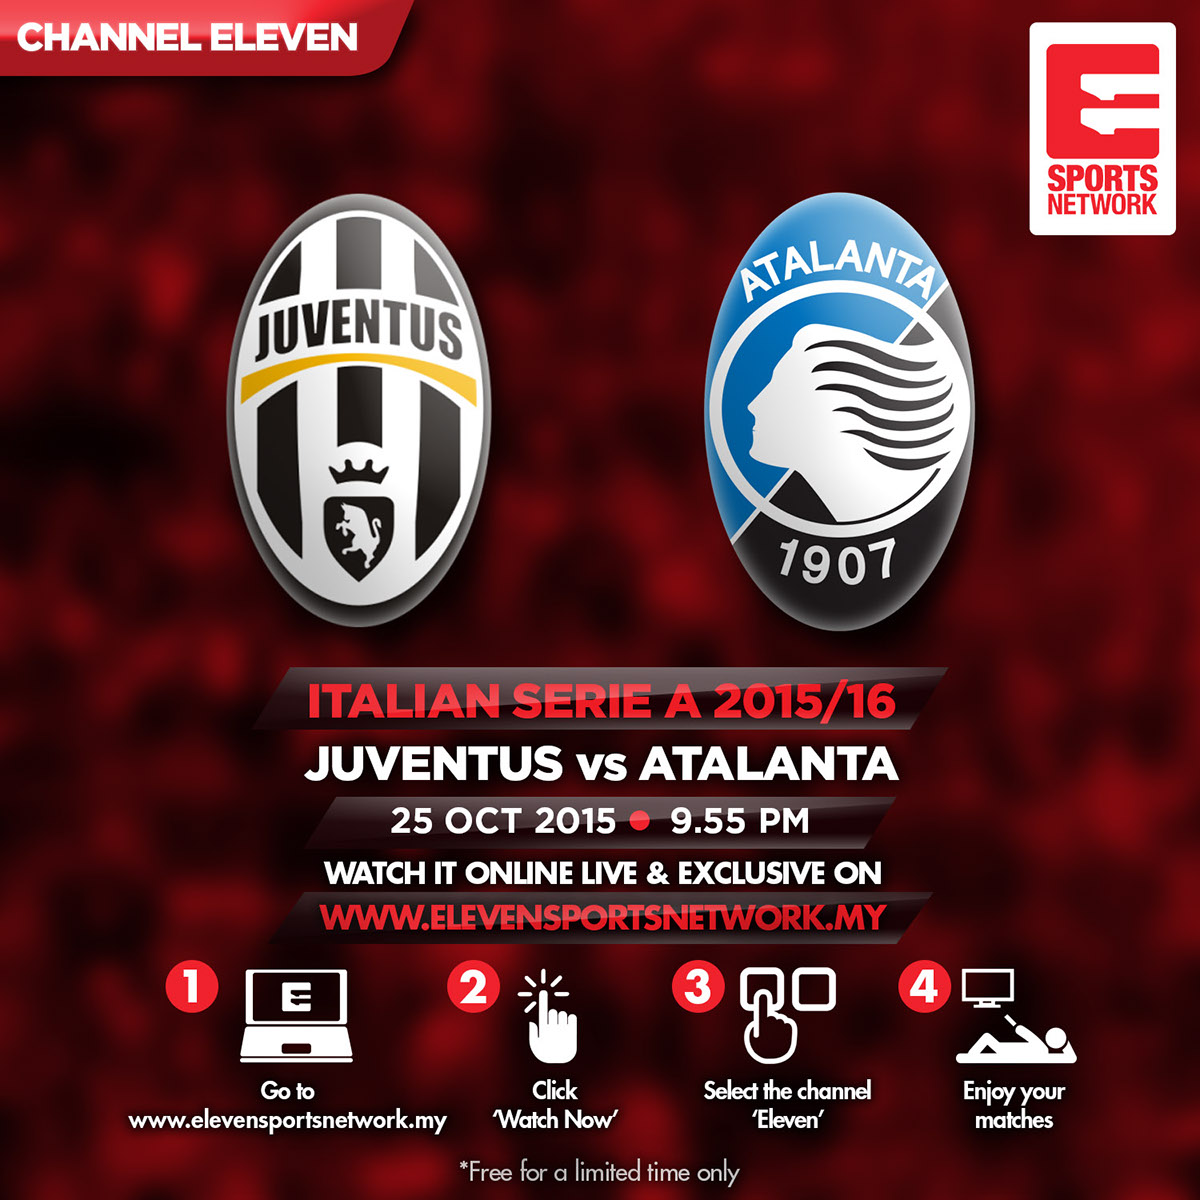 eleven football online online marketing sports TV channel digital design